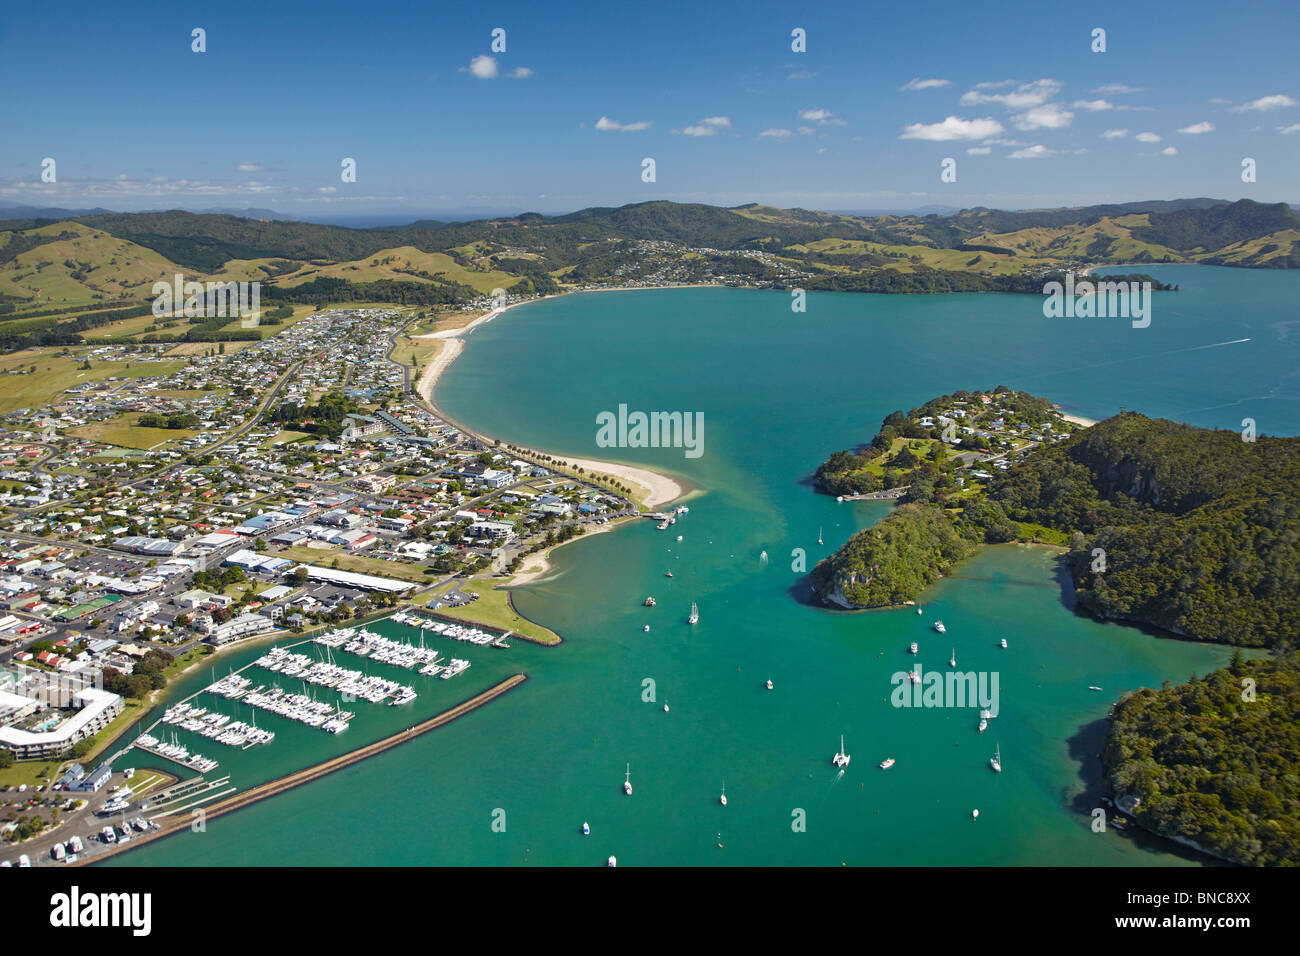 Marina, Whitianga Harbour, Whitianga, Coromandel Peninsula, North Island, New Zealand - aerial Stock Photo